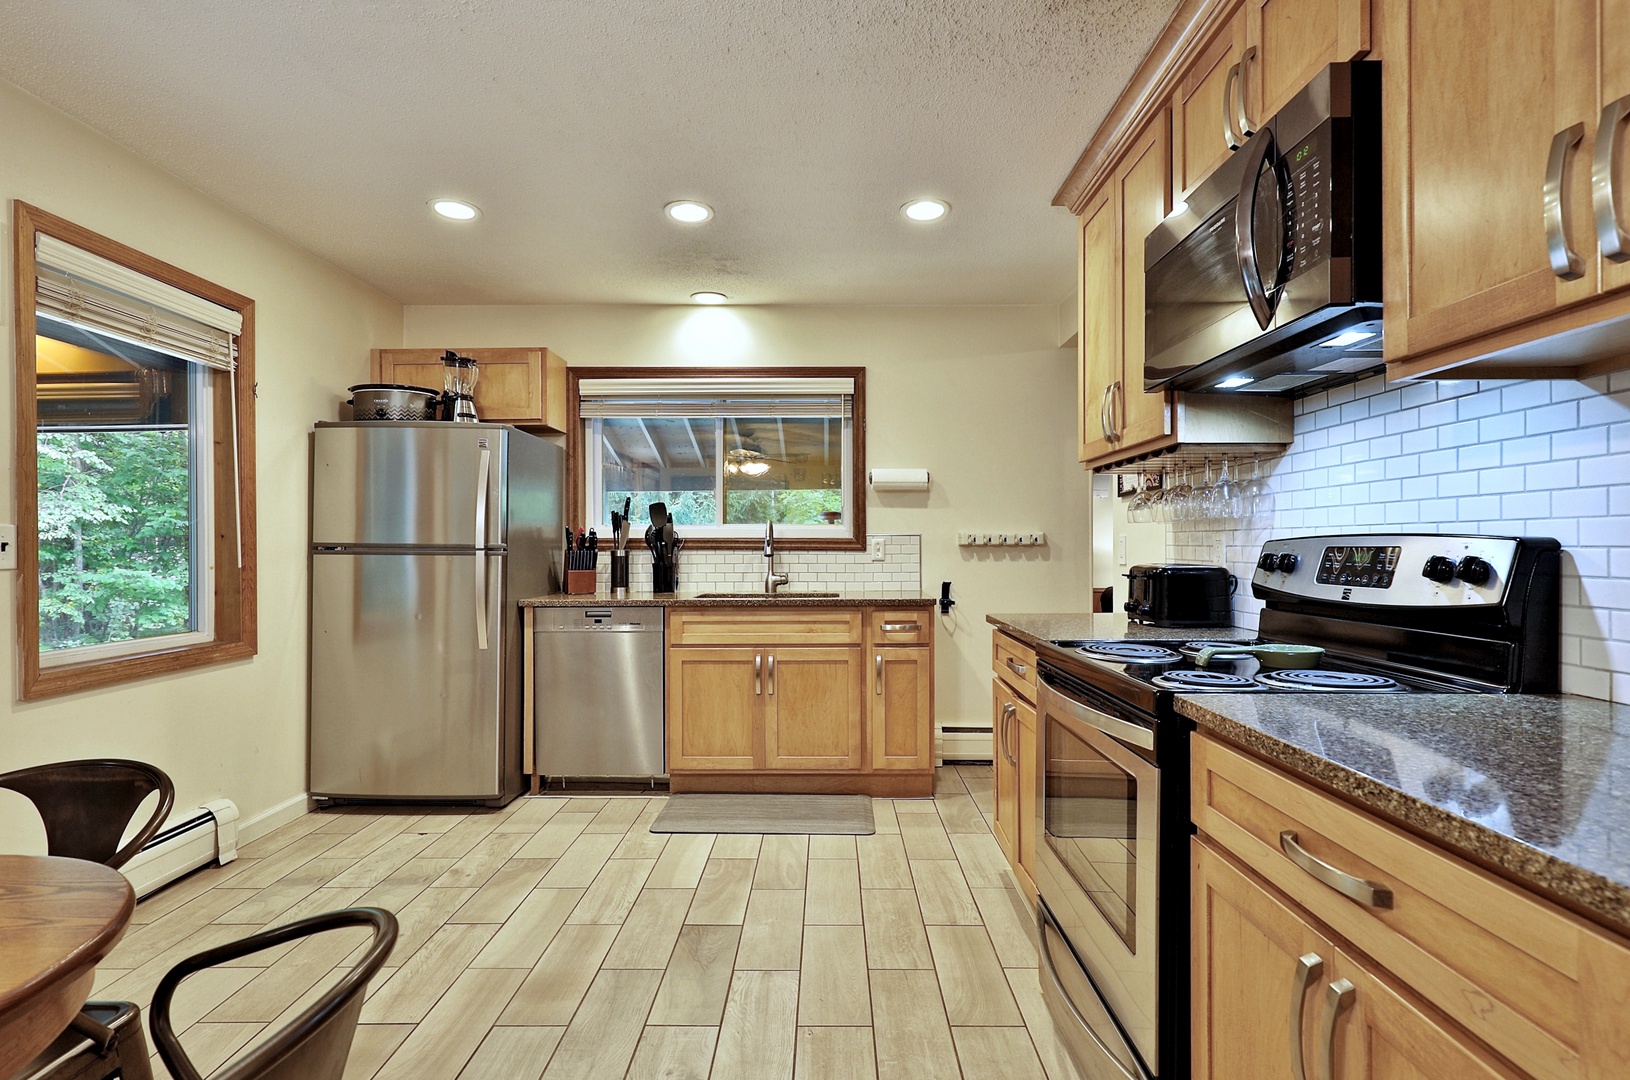 Full kitchen with fridge, mini-fridge, stove, microwave